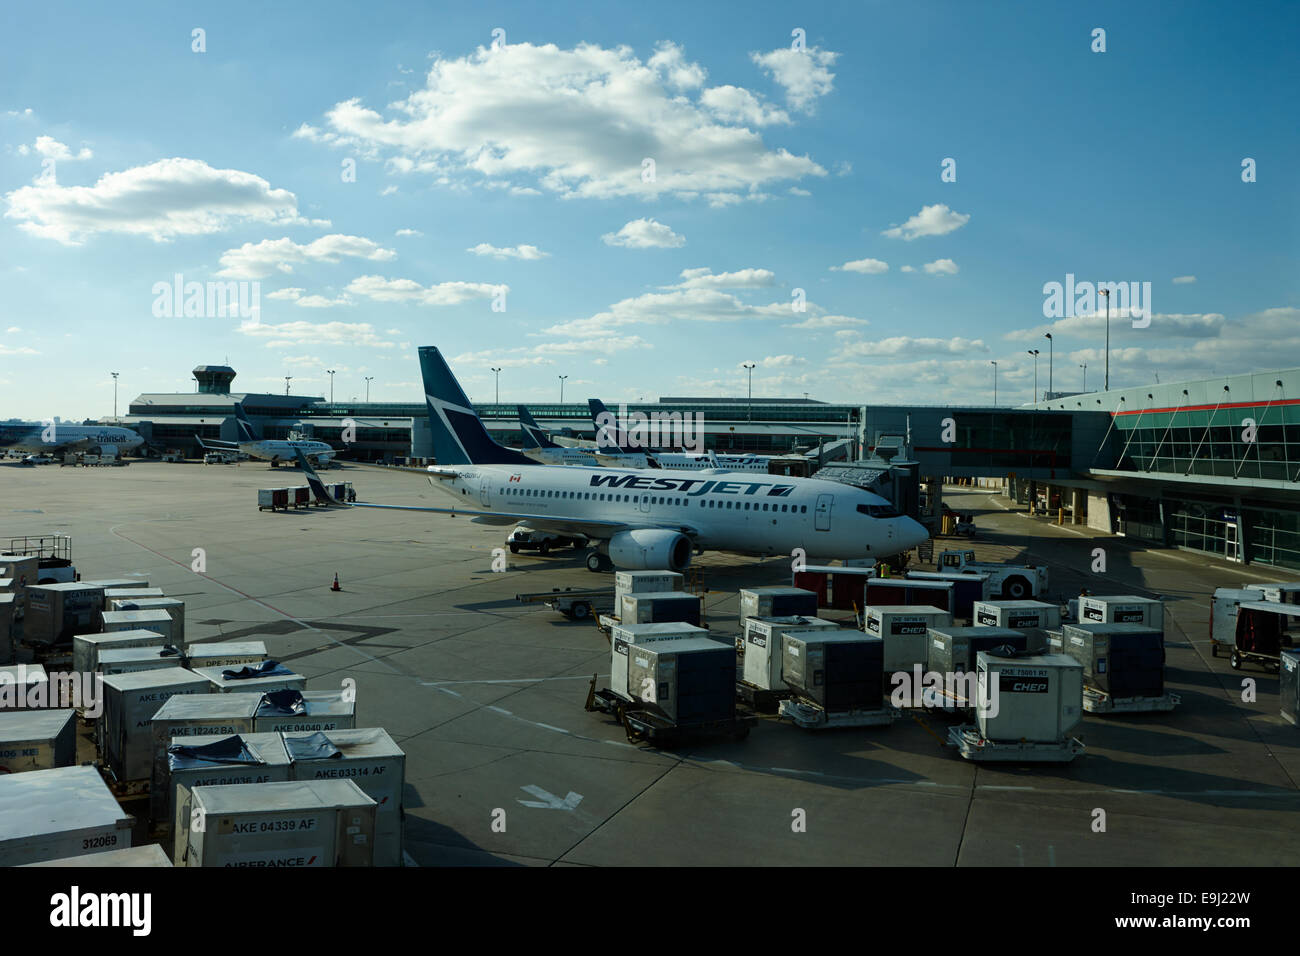 westjet aircraft at terminal 3 toronto pearson international airport Canada Stock Photo